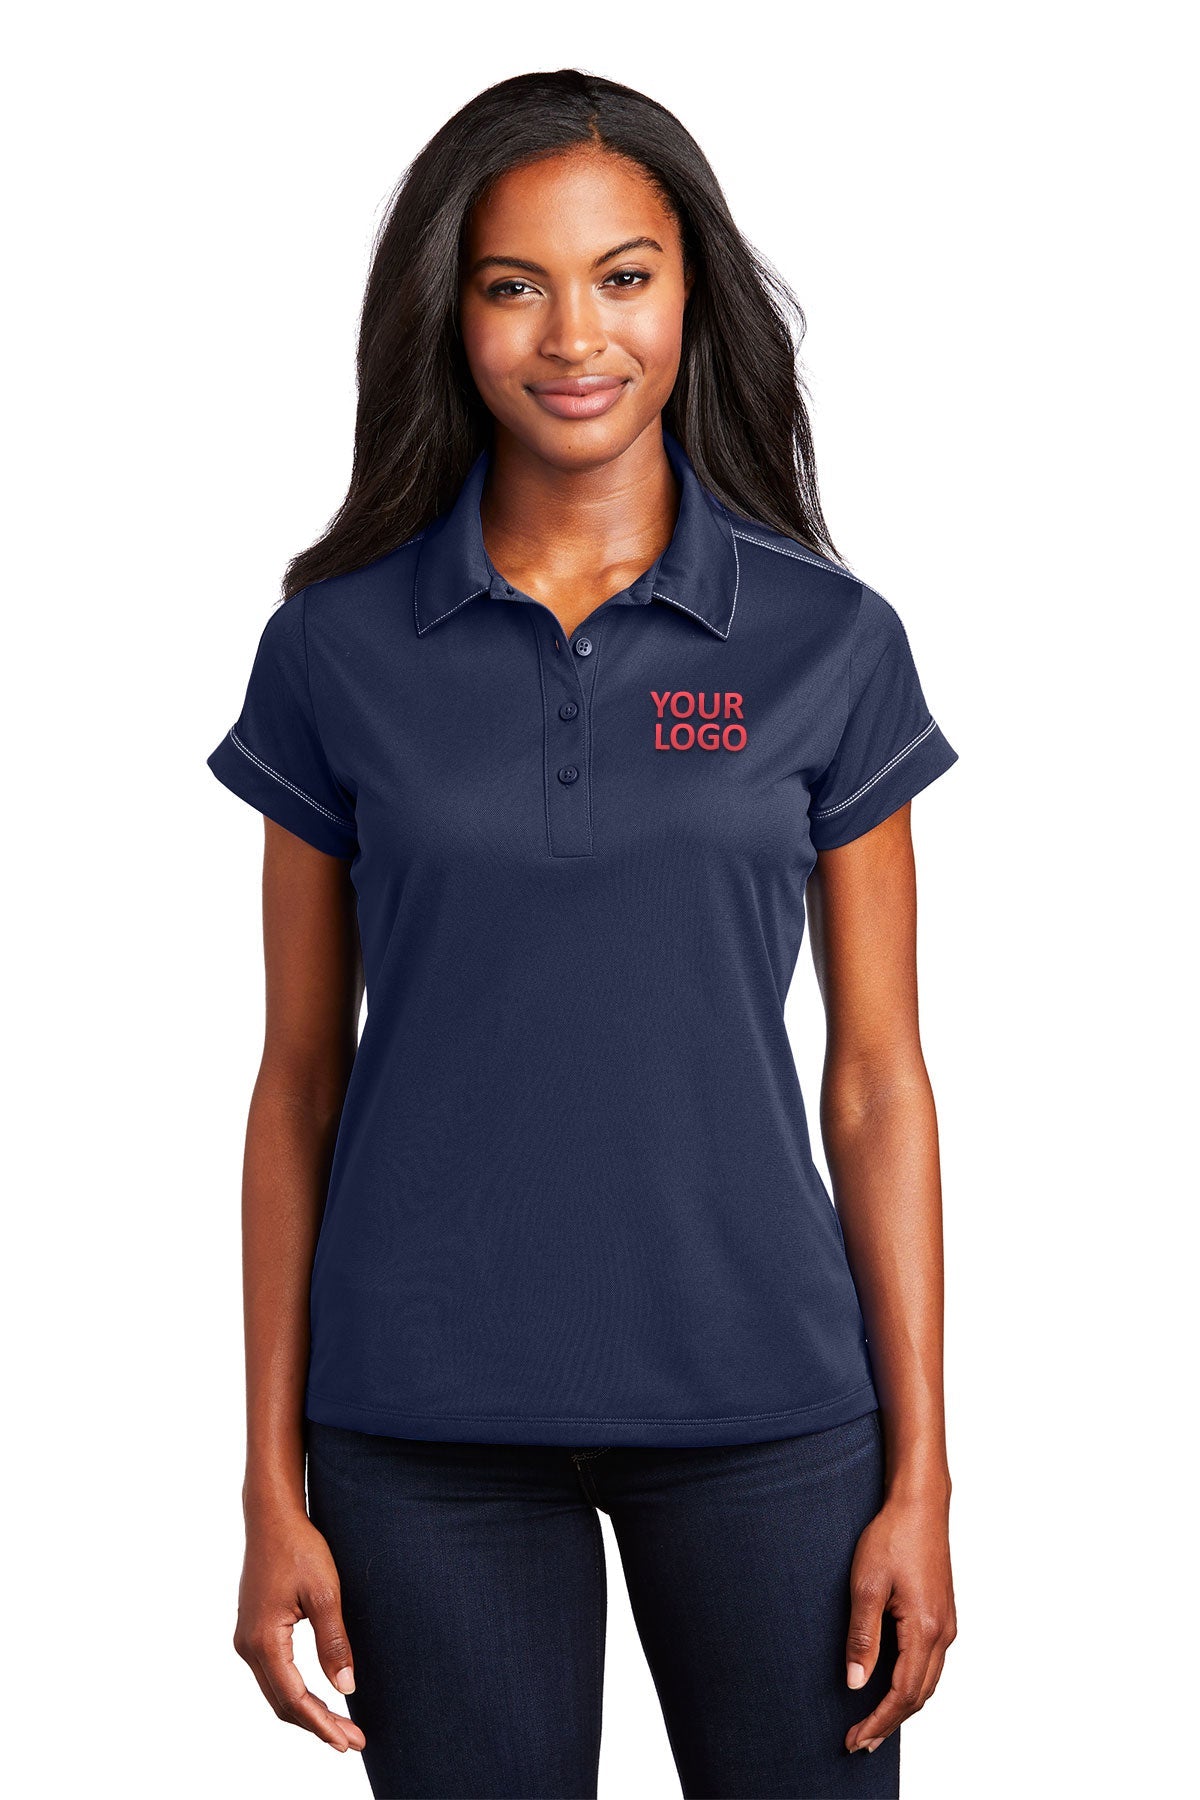 Sport-Tek True Navy LST659 custom women's polo shirts